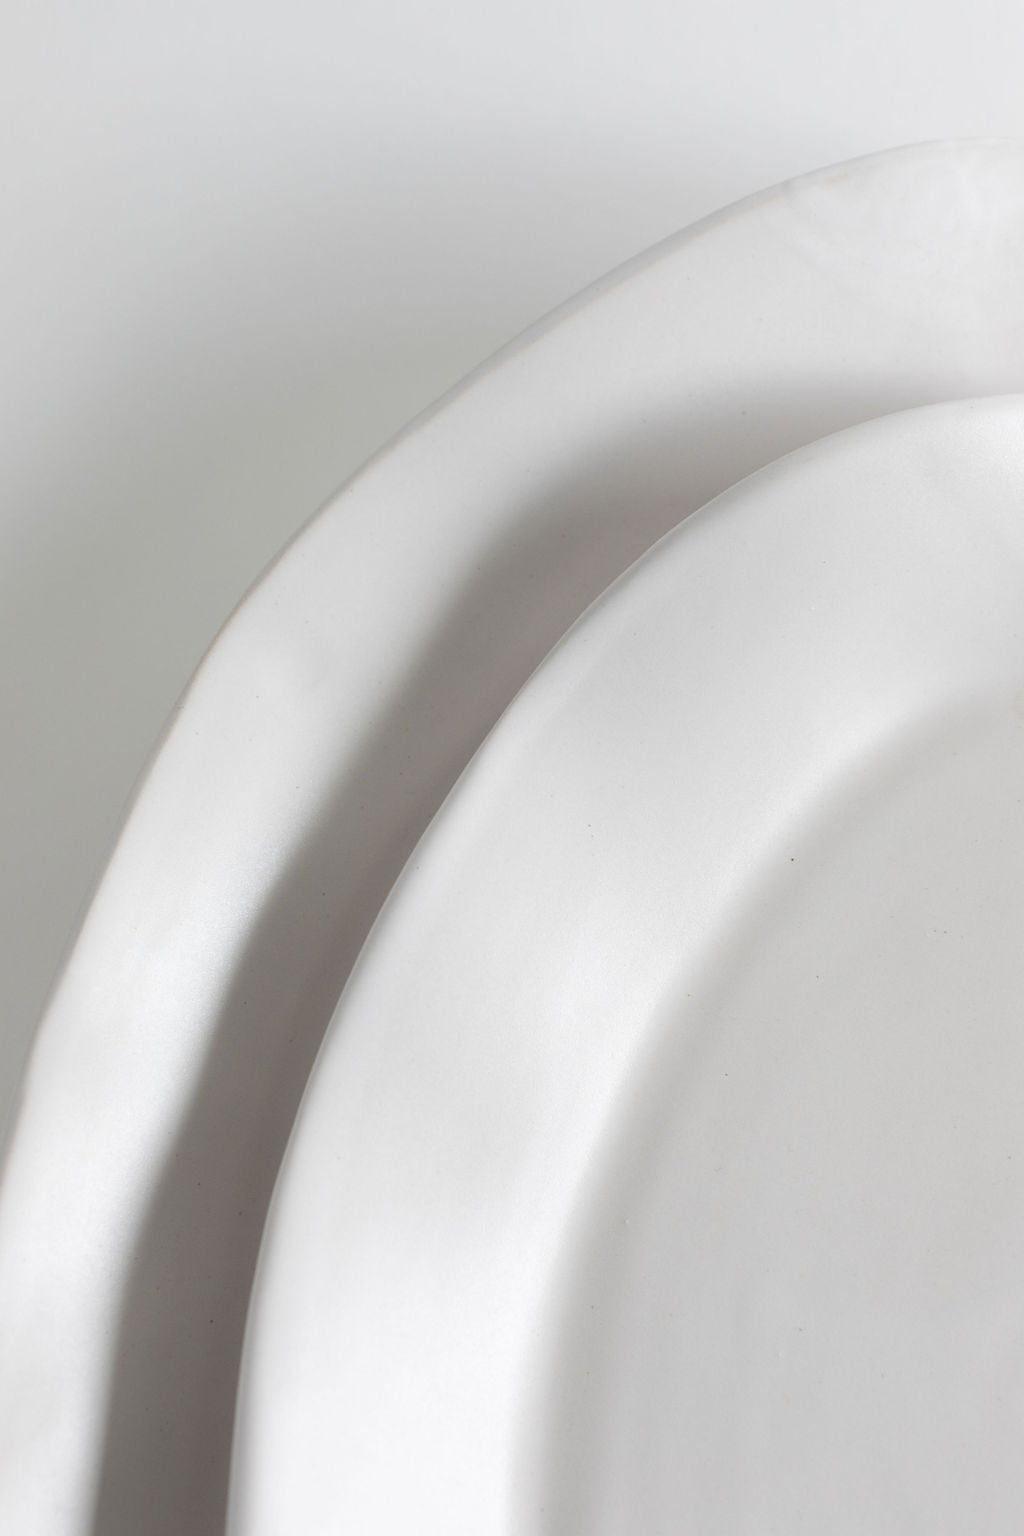 White Matte Oval Serving Platters